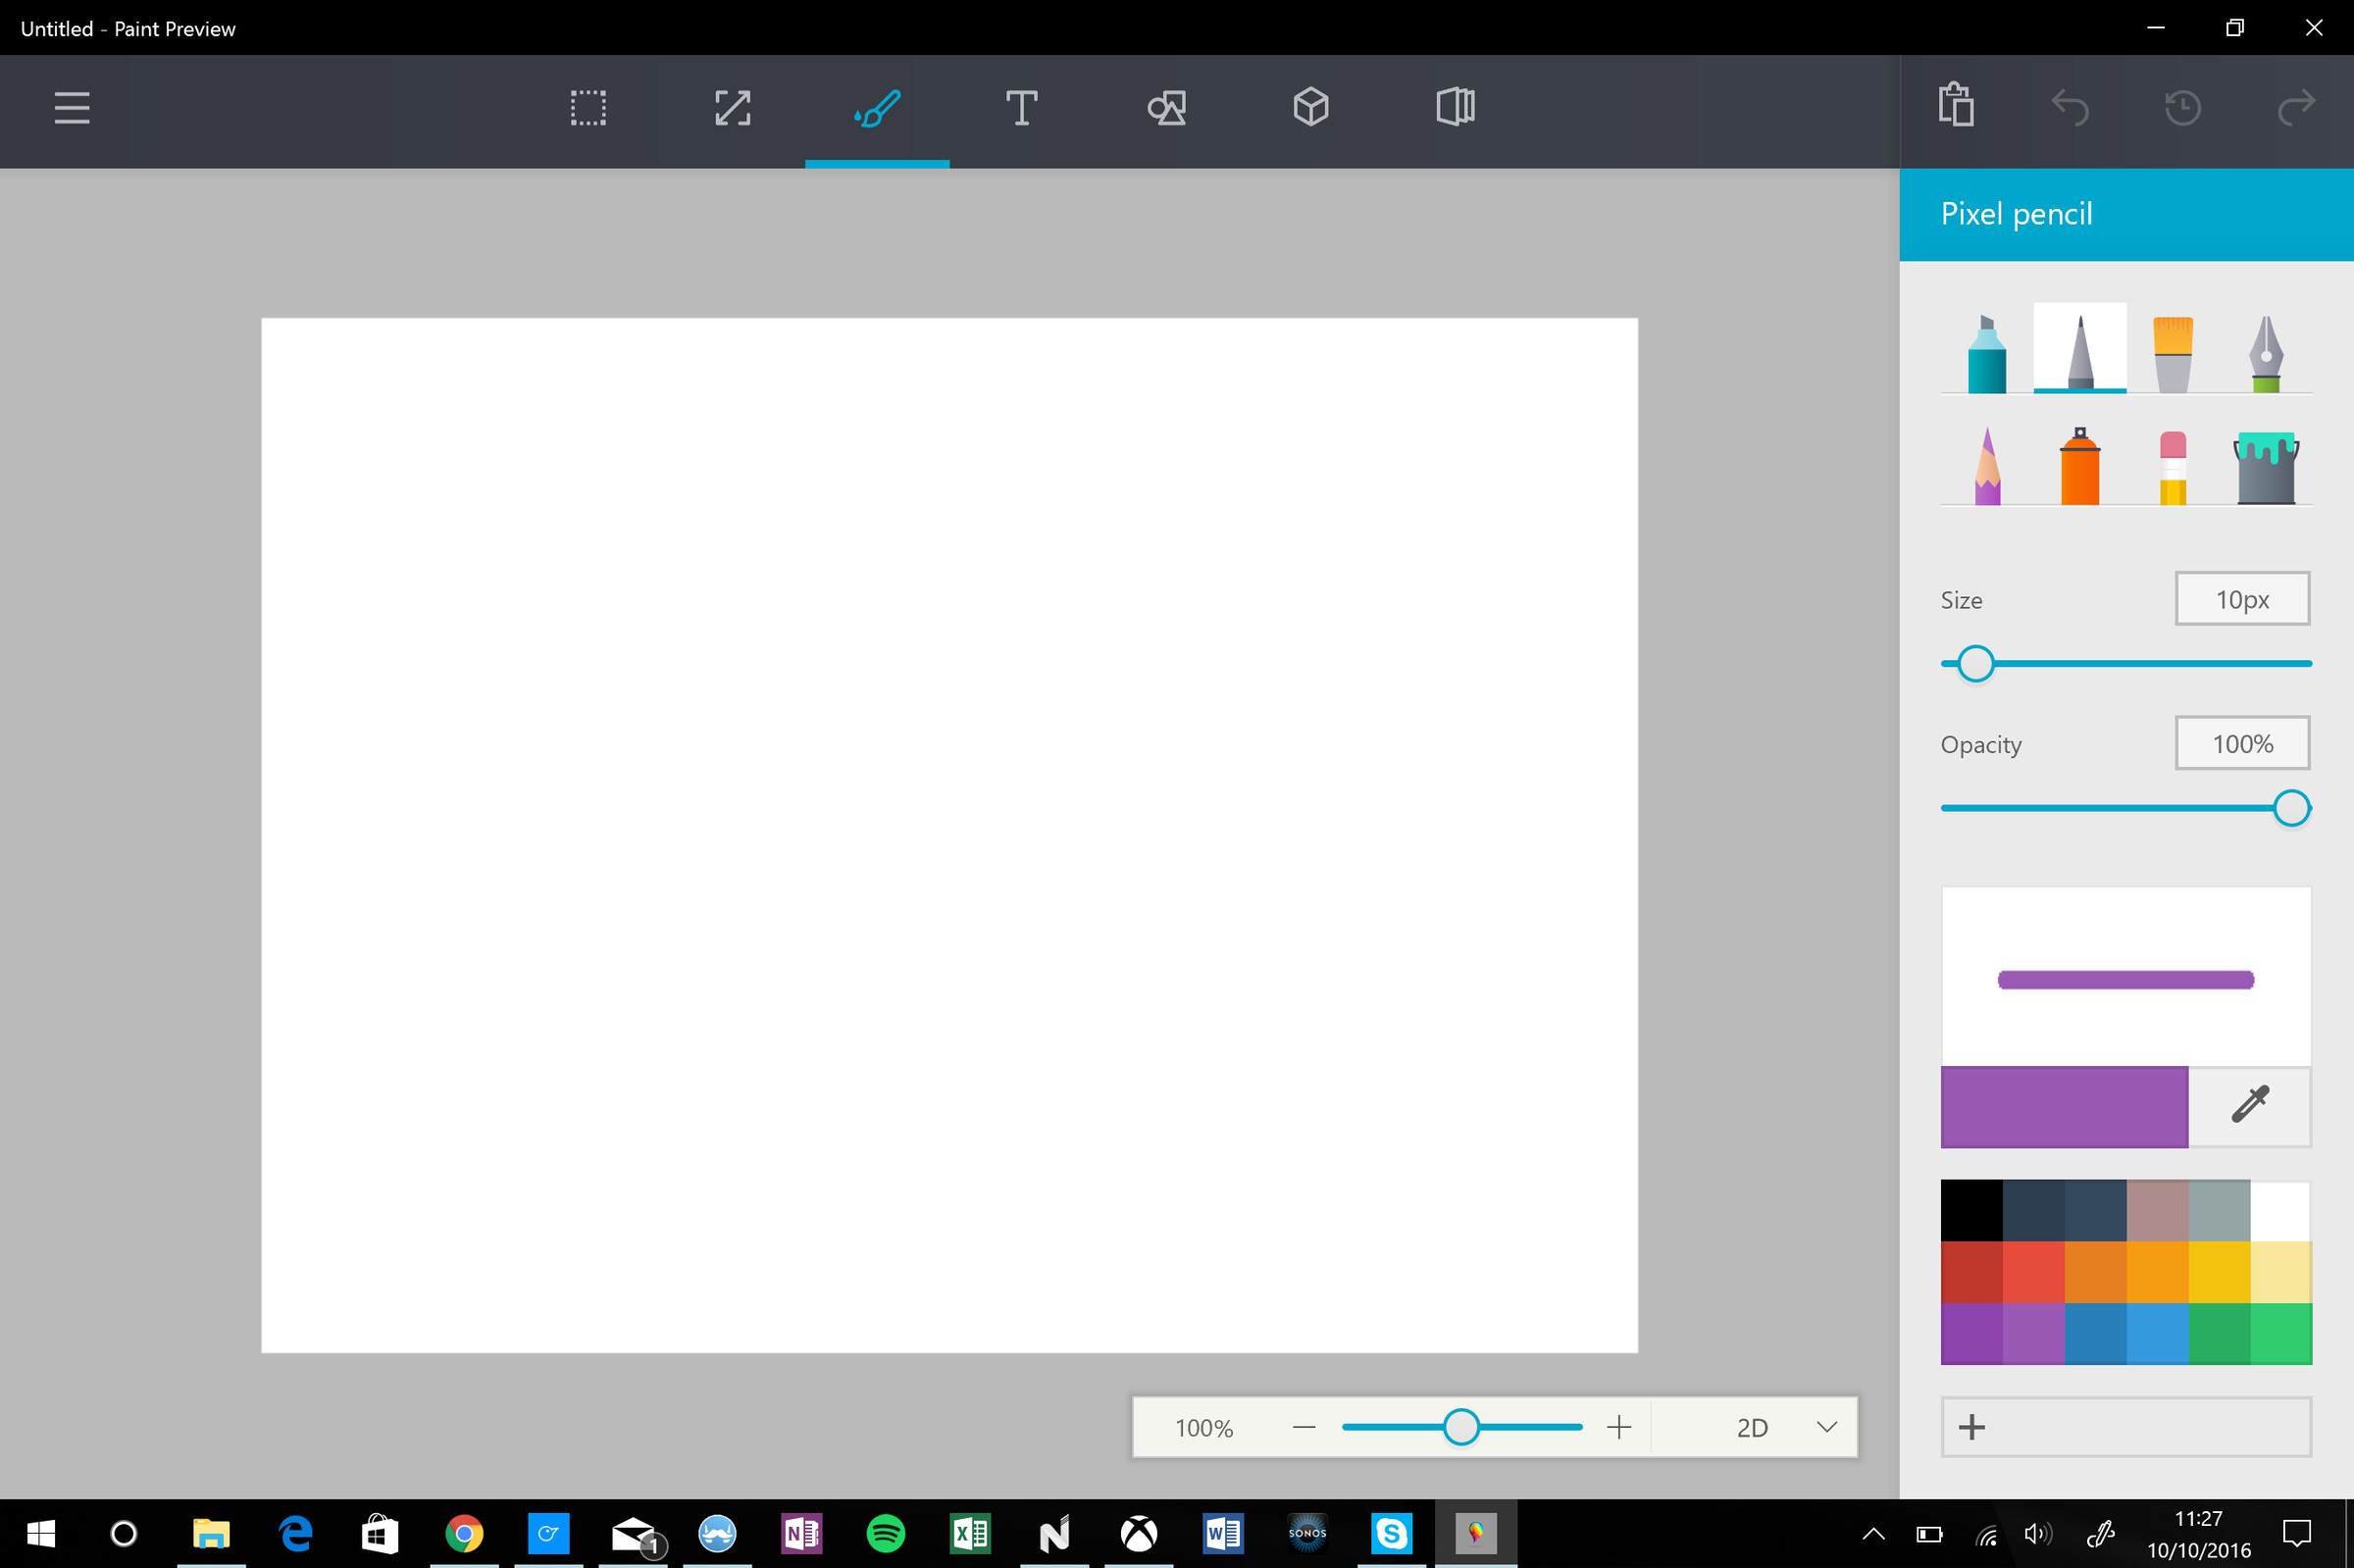 Microsoft Paint for Windows 10